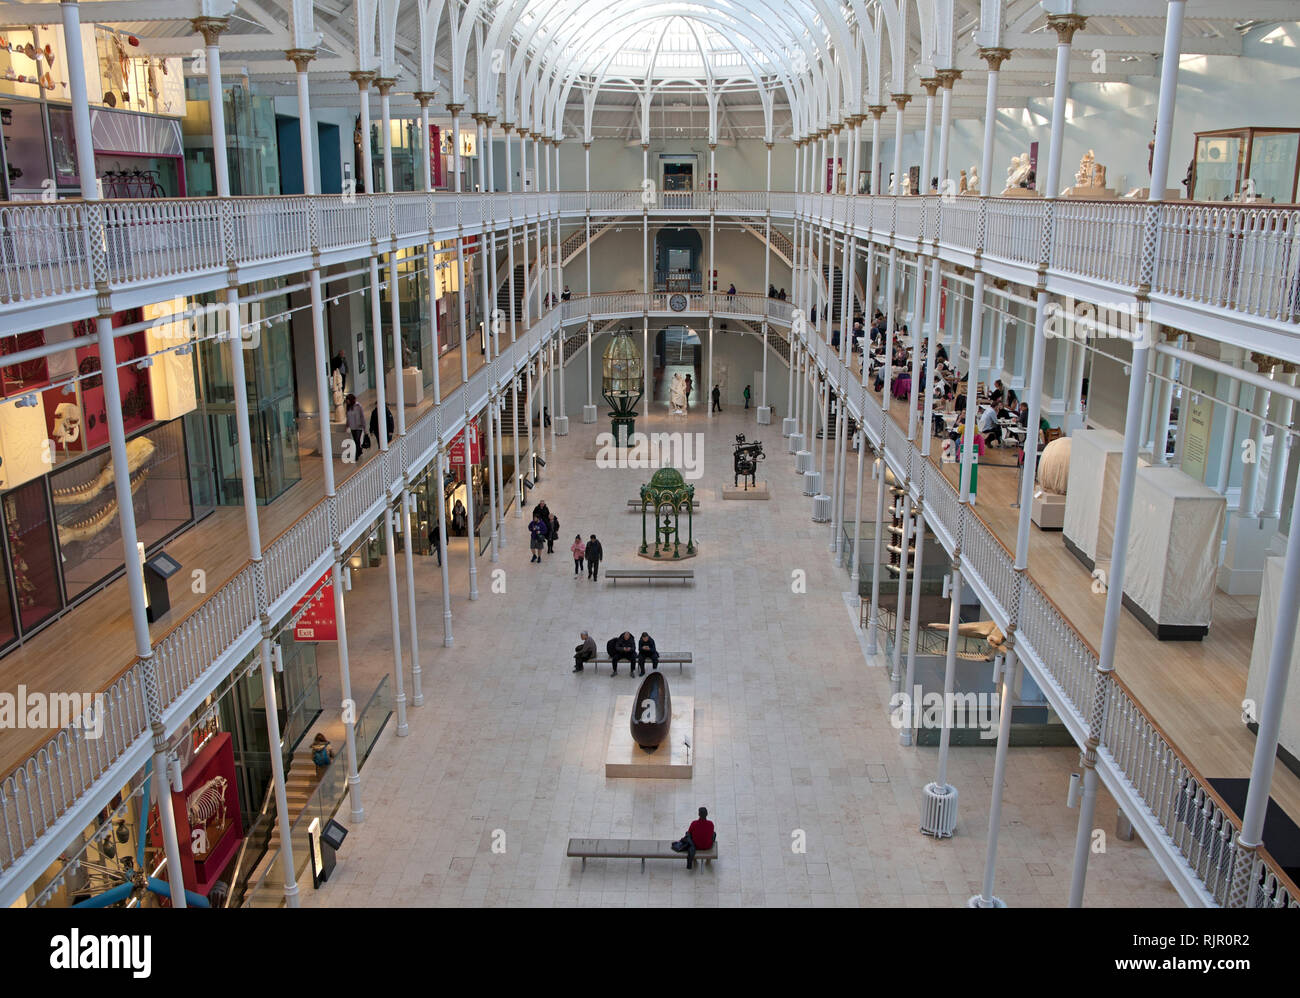 National Museum of Scotland, Edinburgh, Chambers Street, Schottland, Großbritannien Stockfoto